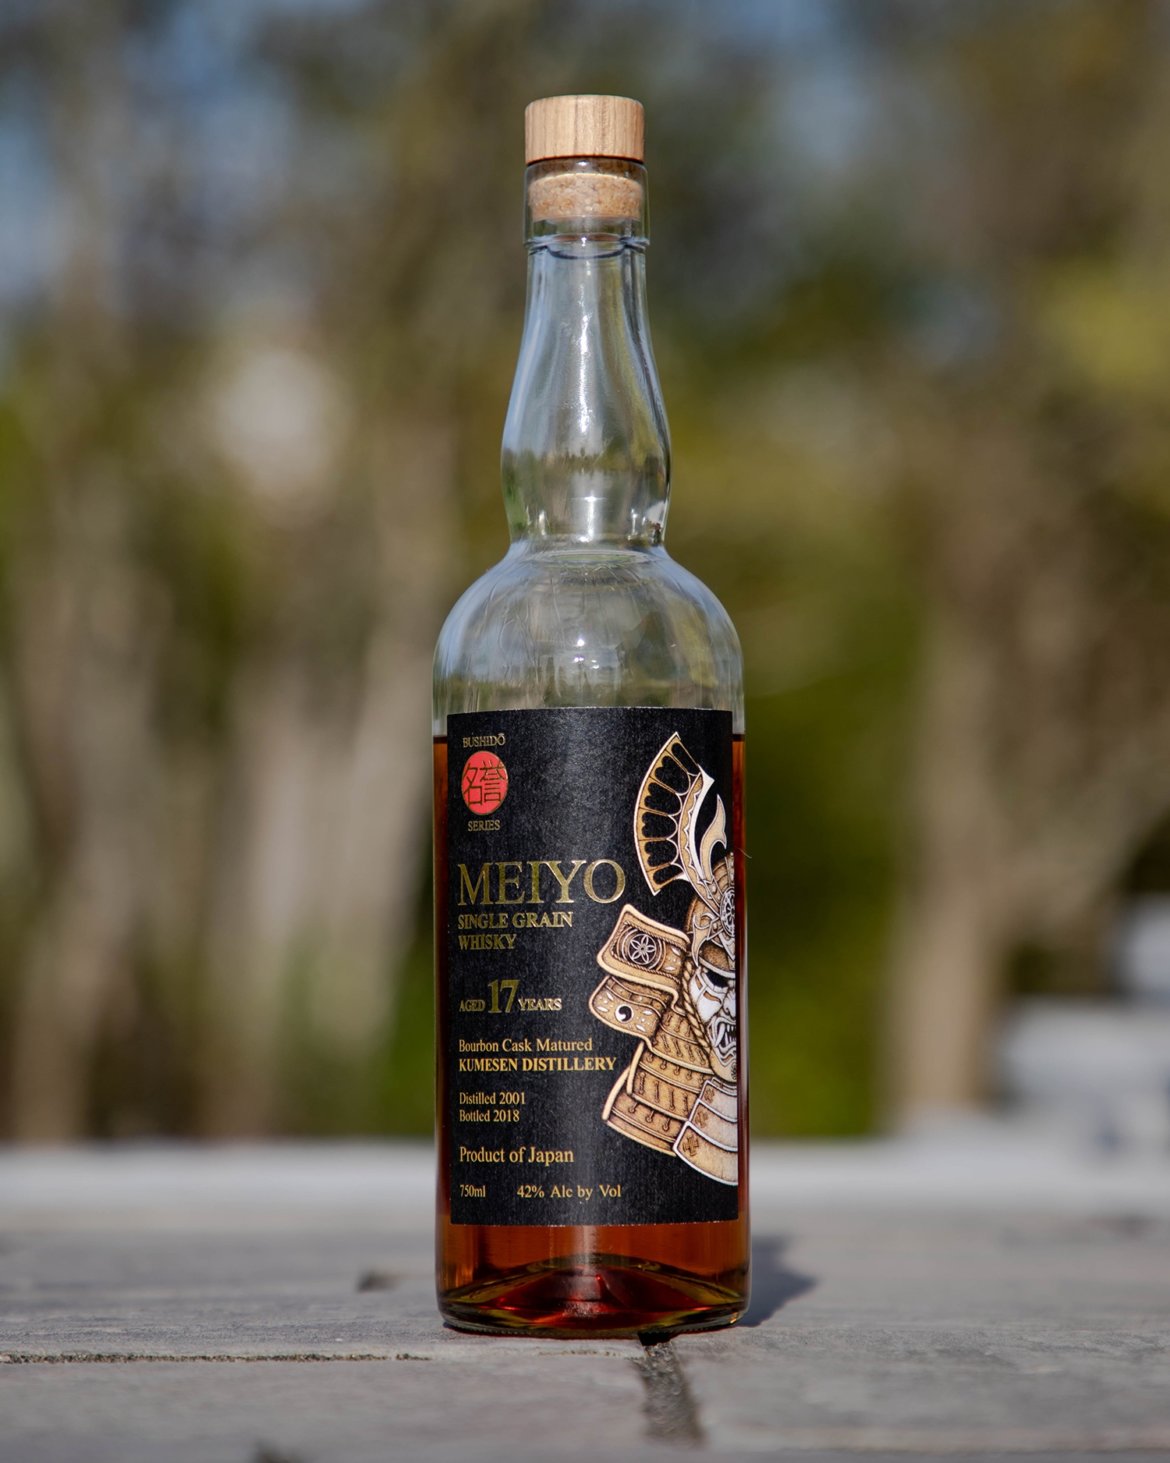 A bottle of Japanese whisky called Kumesen Meiyo 17-Year Old Single Grain